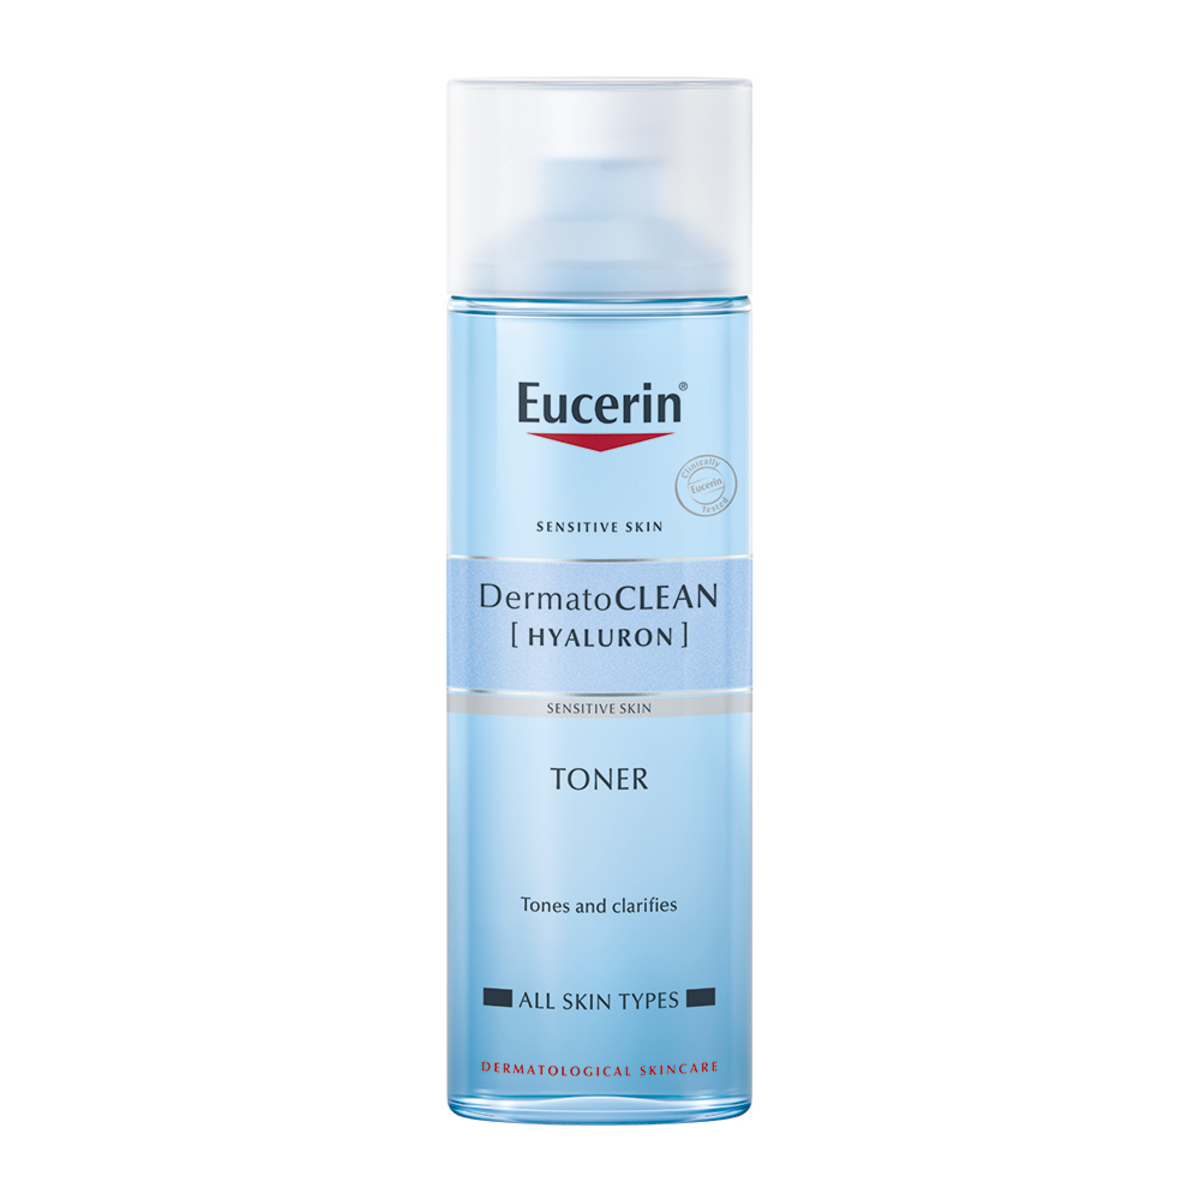 Eucerin Dermatoclean Toner - 200ml